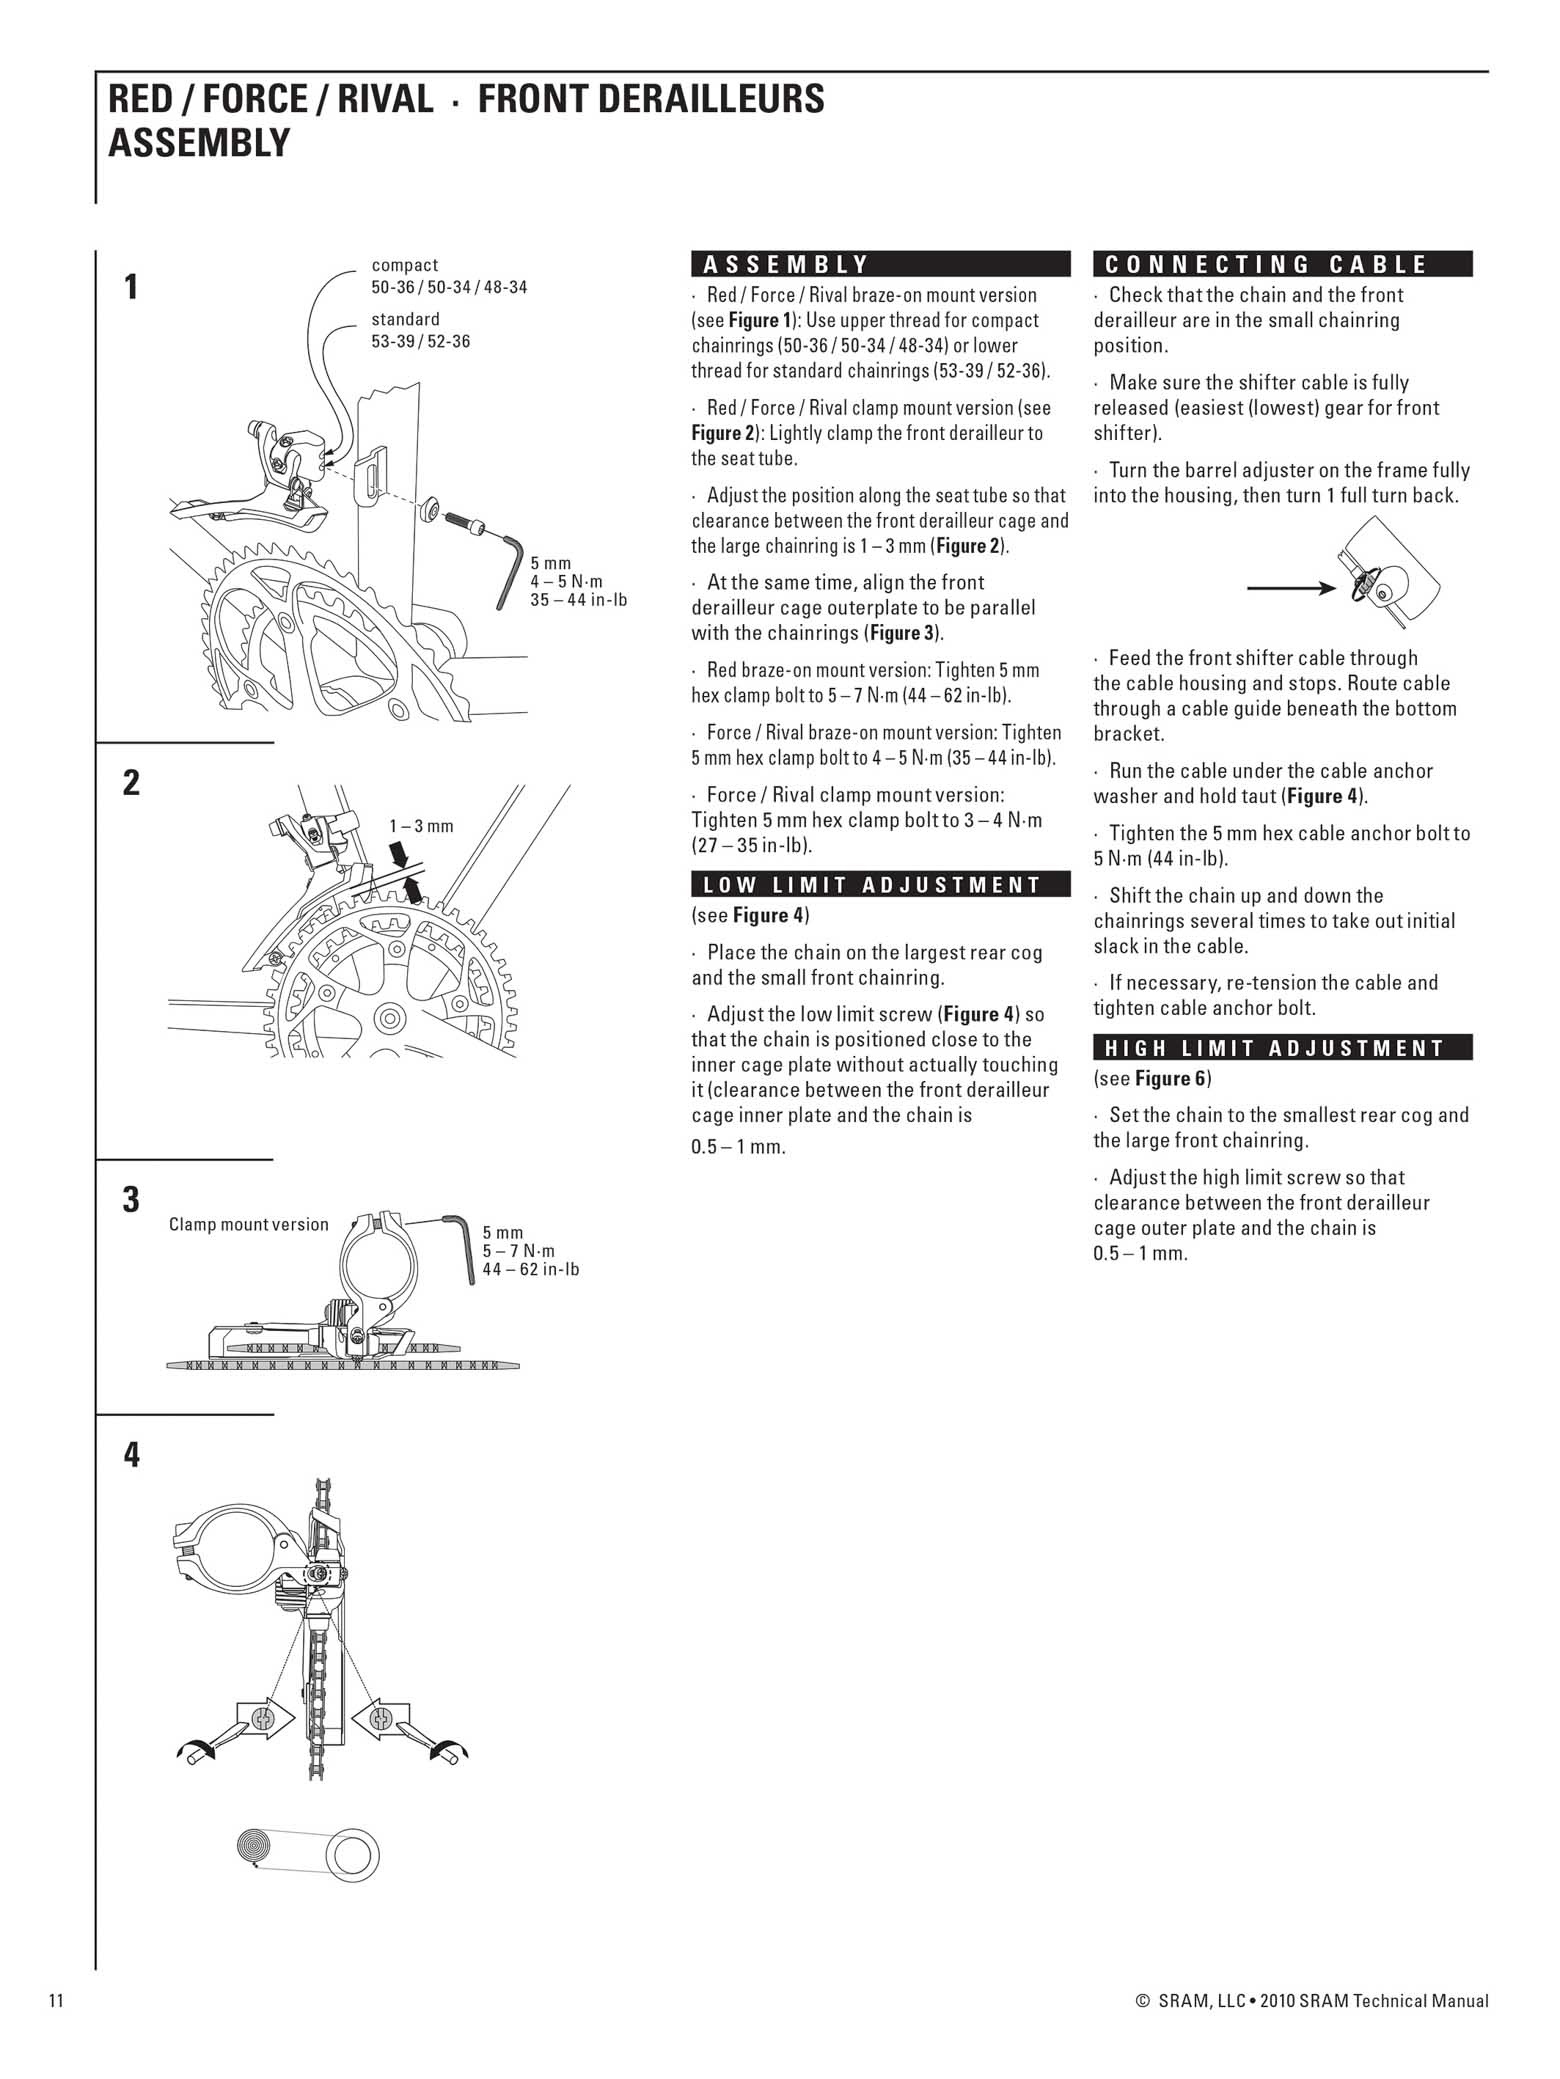 SRAM Technical Manual 2010 page 011 main image